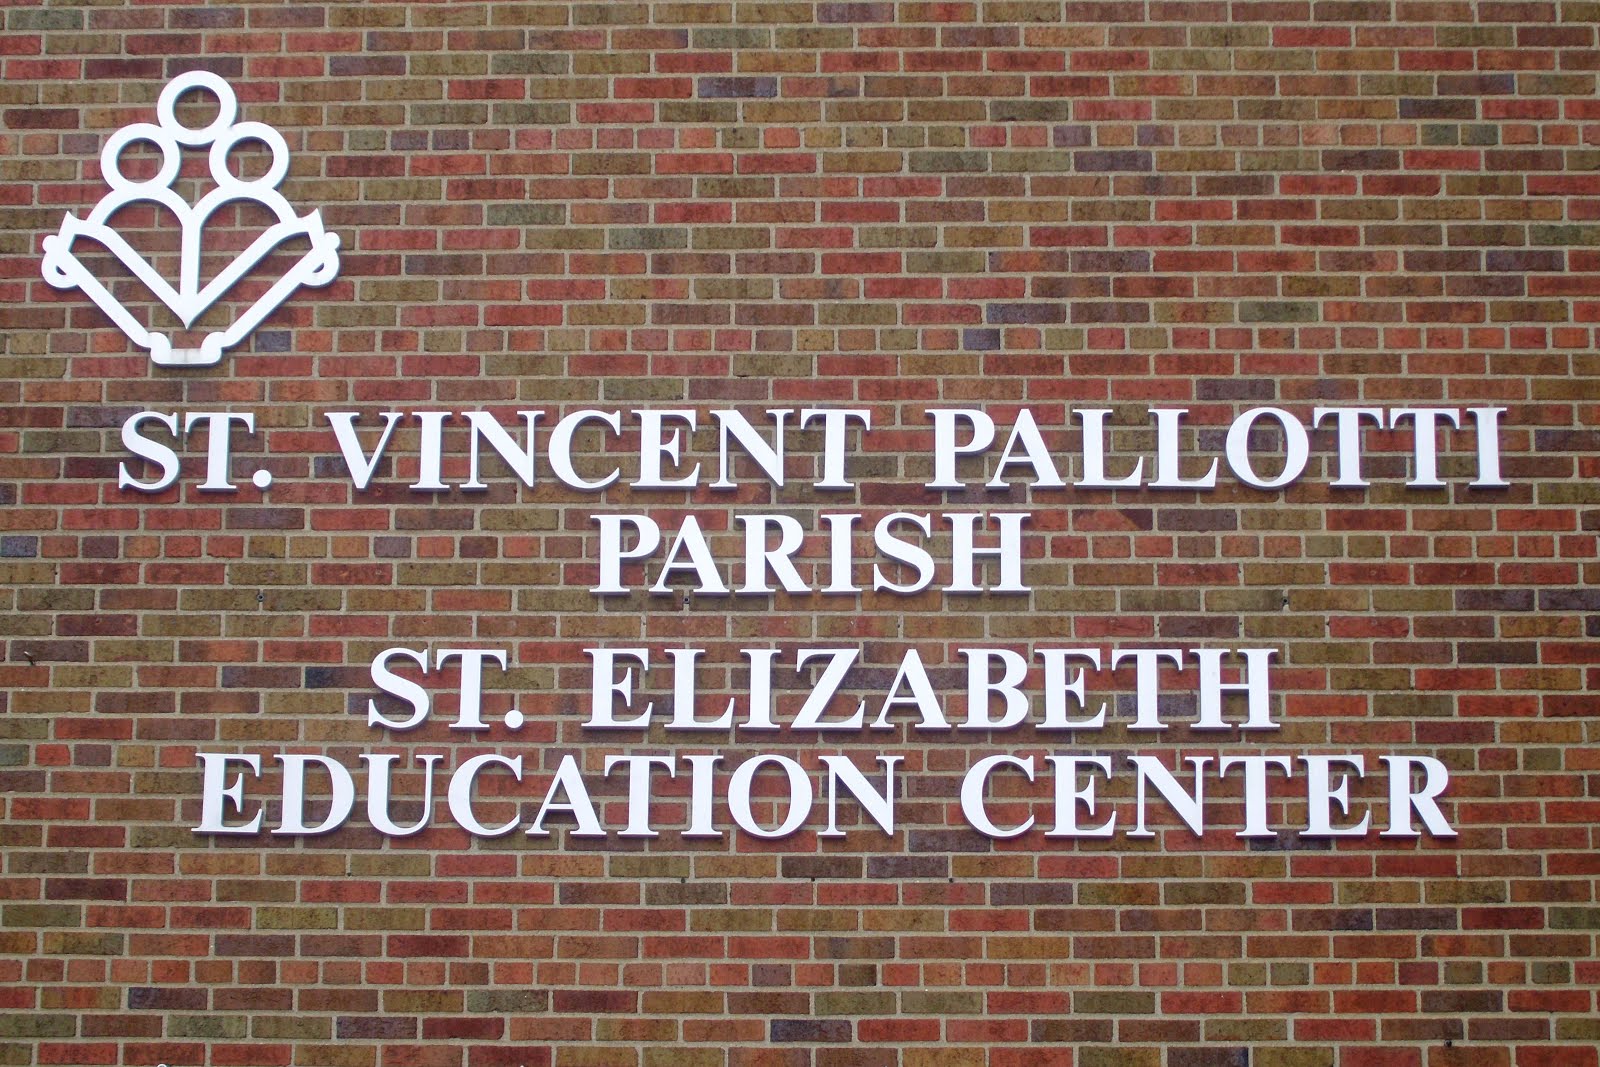 St. Elizabeth Education Center